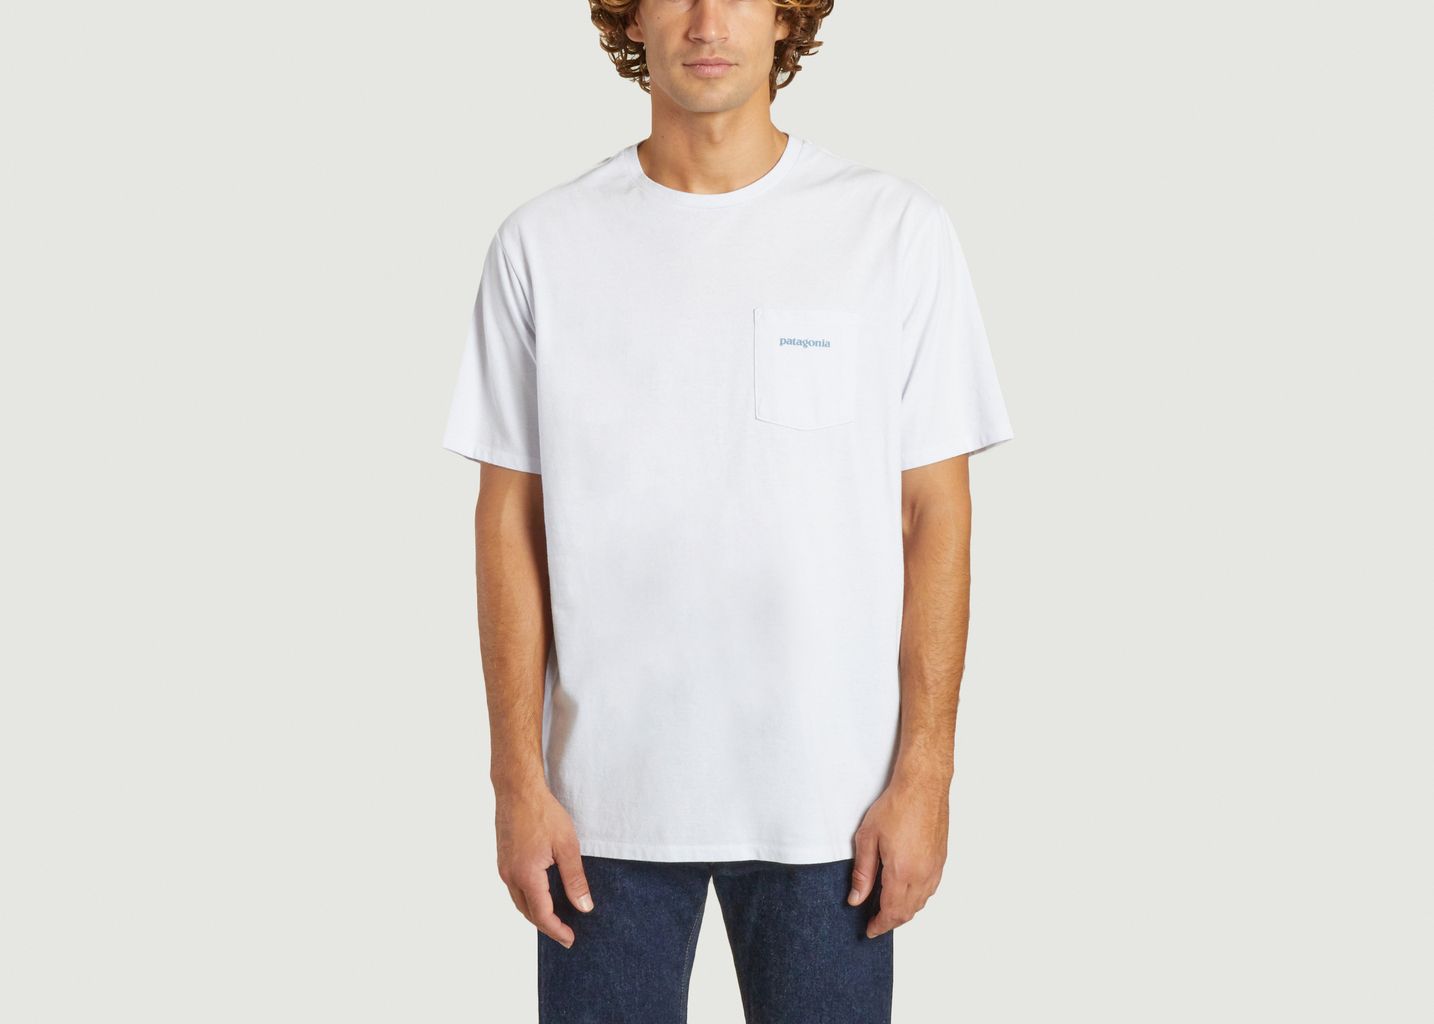 Boardshort T-shirt - Patagonia